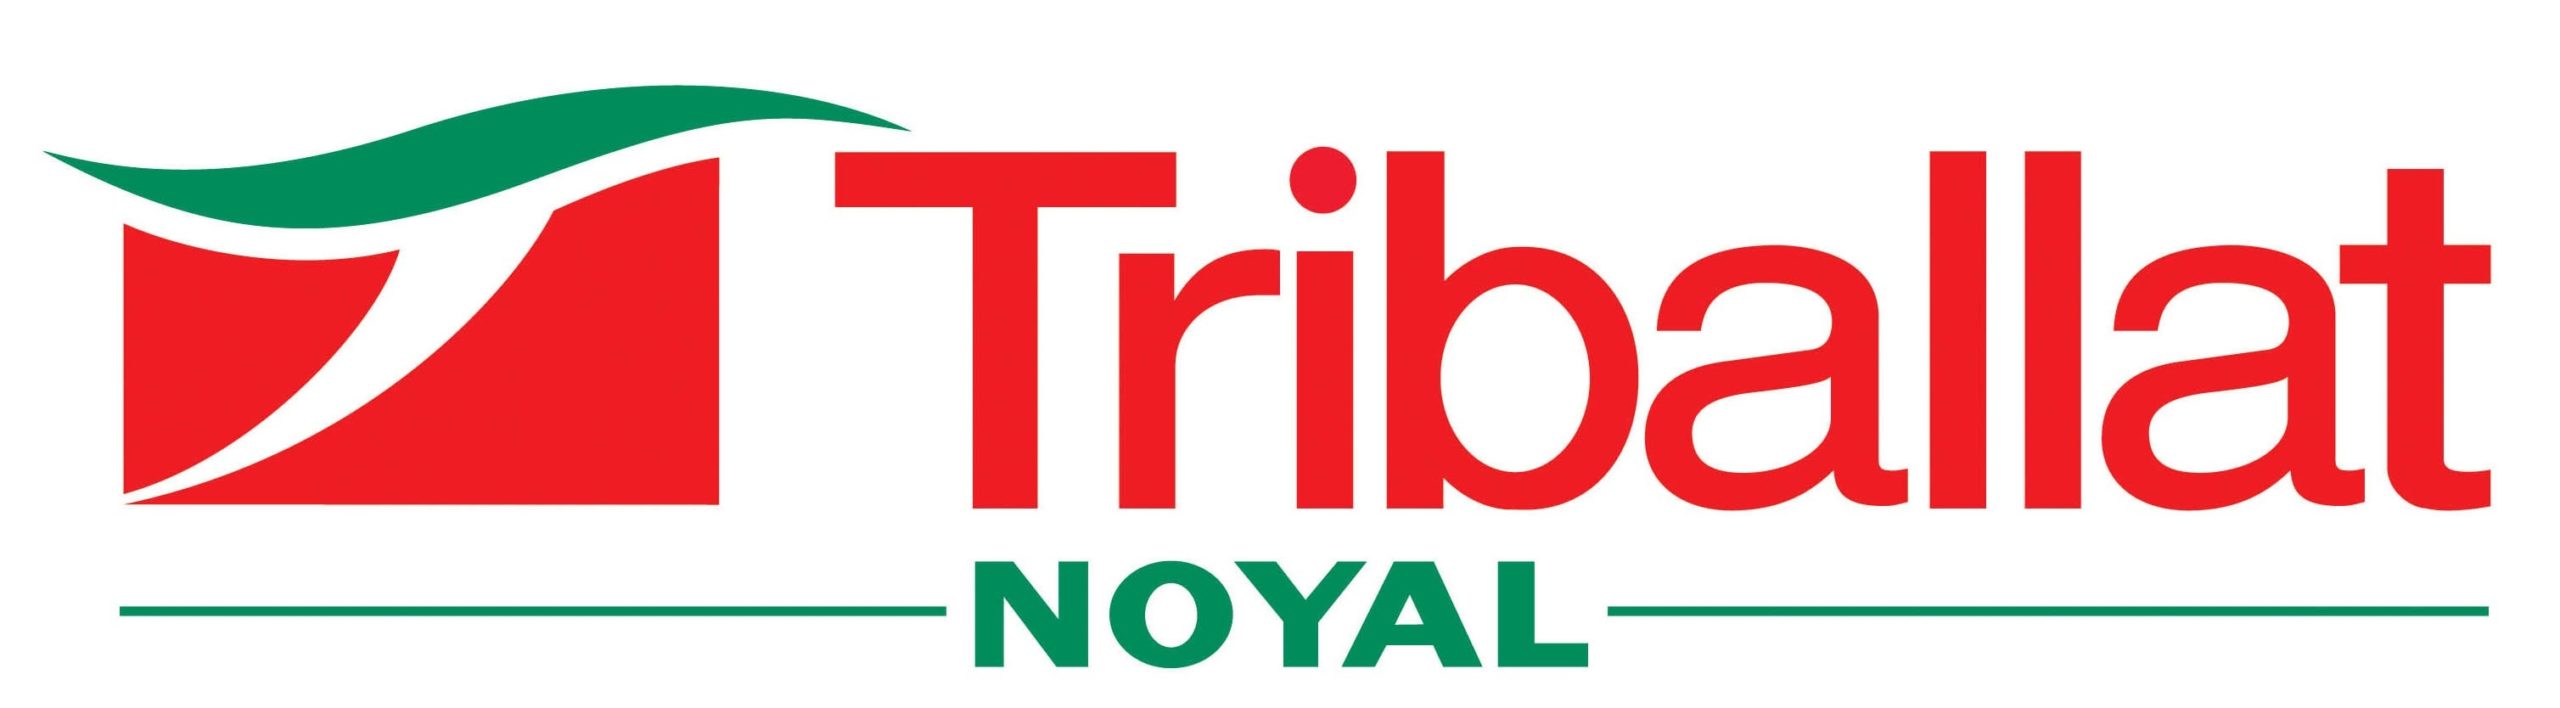 Triballat scaled logo